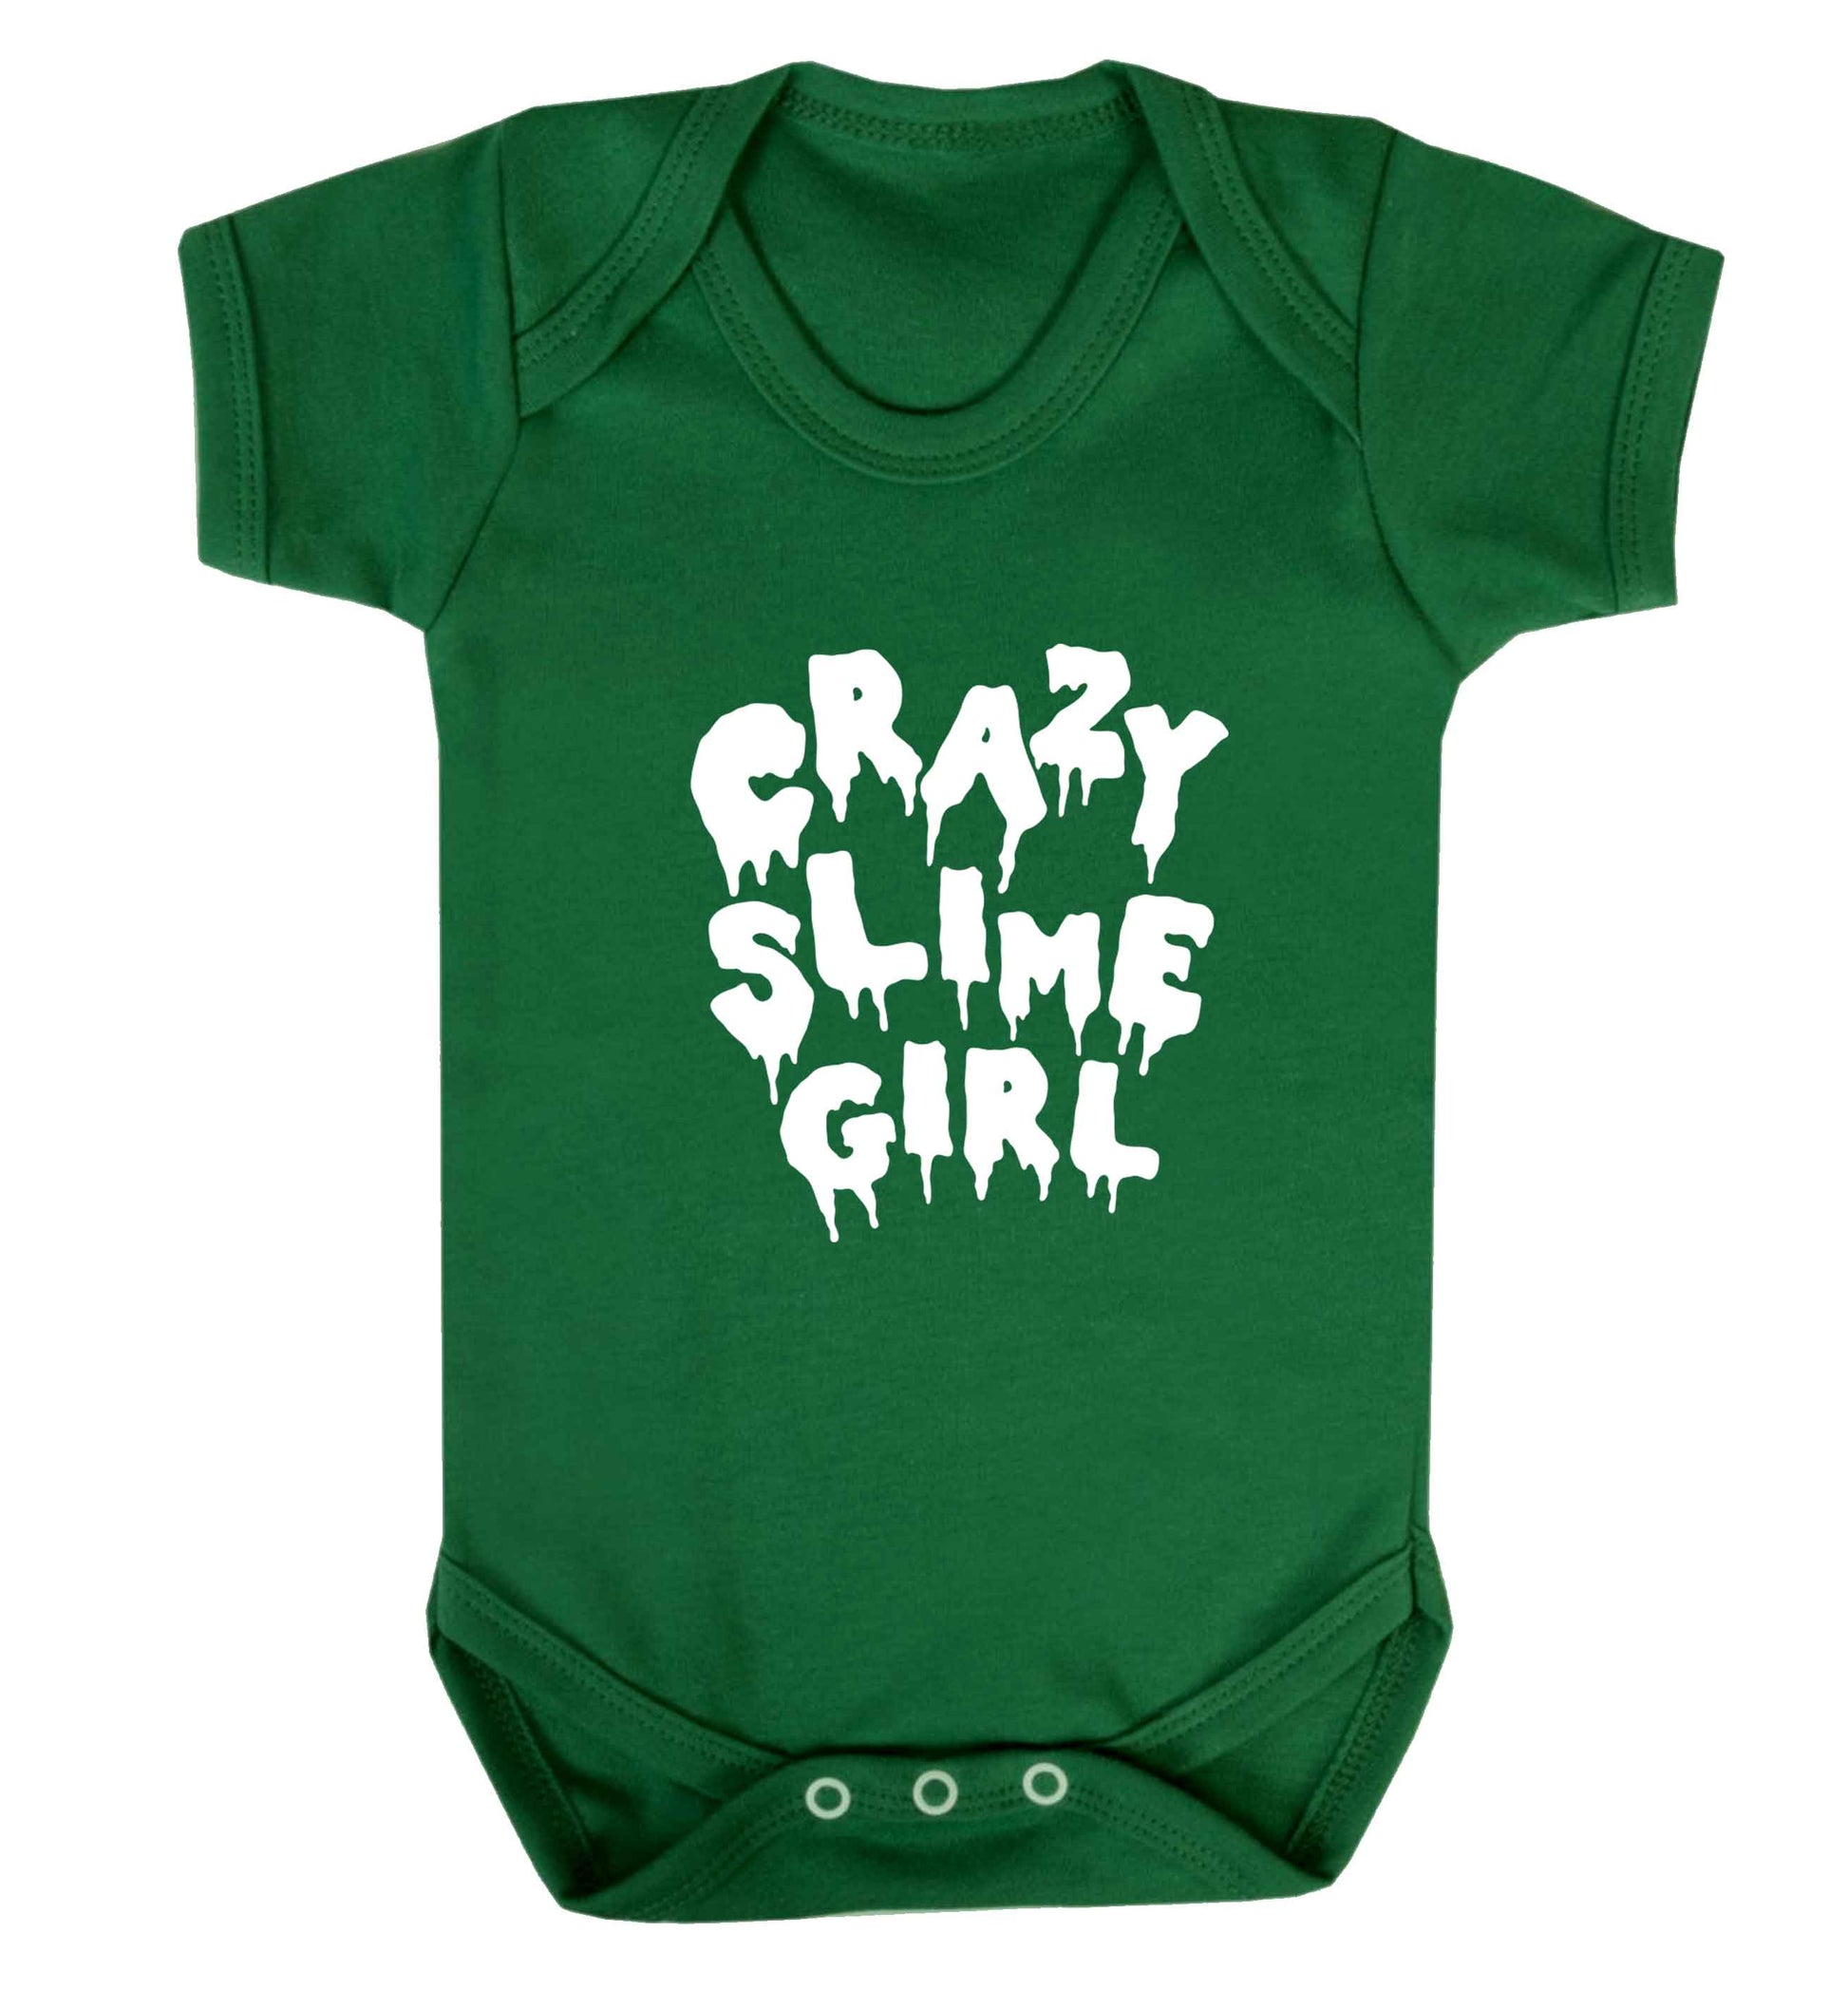 Crazy slime girl baby vest green 18-24 months